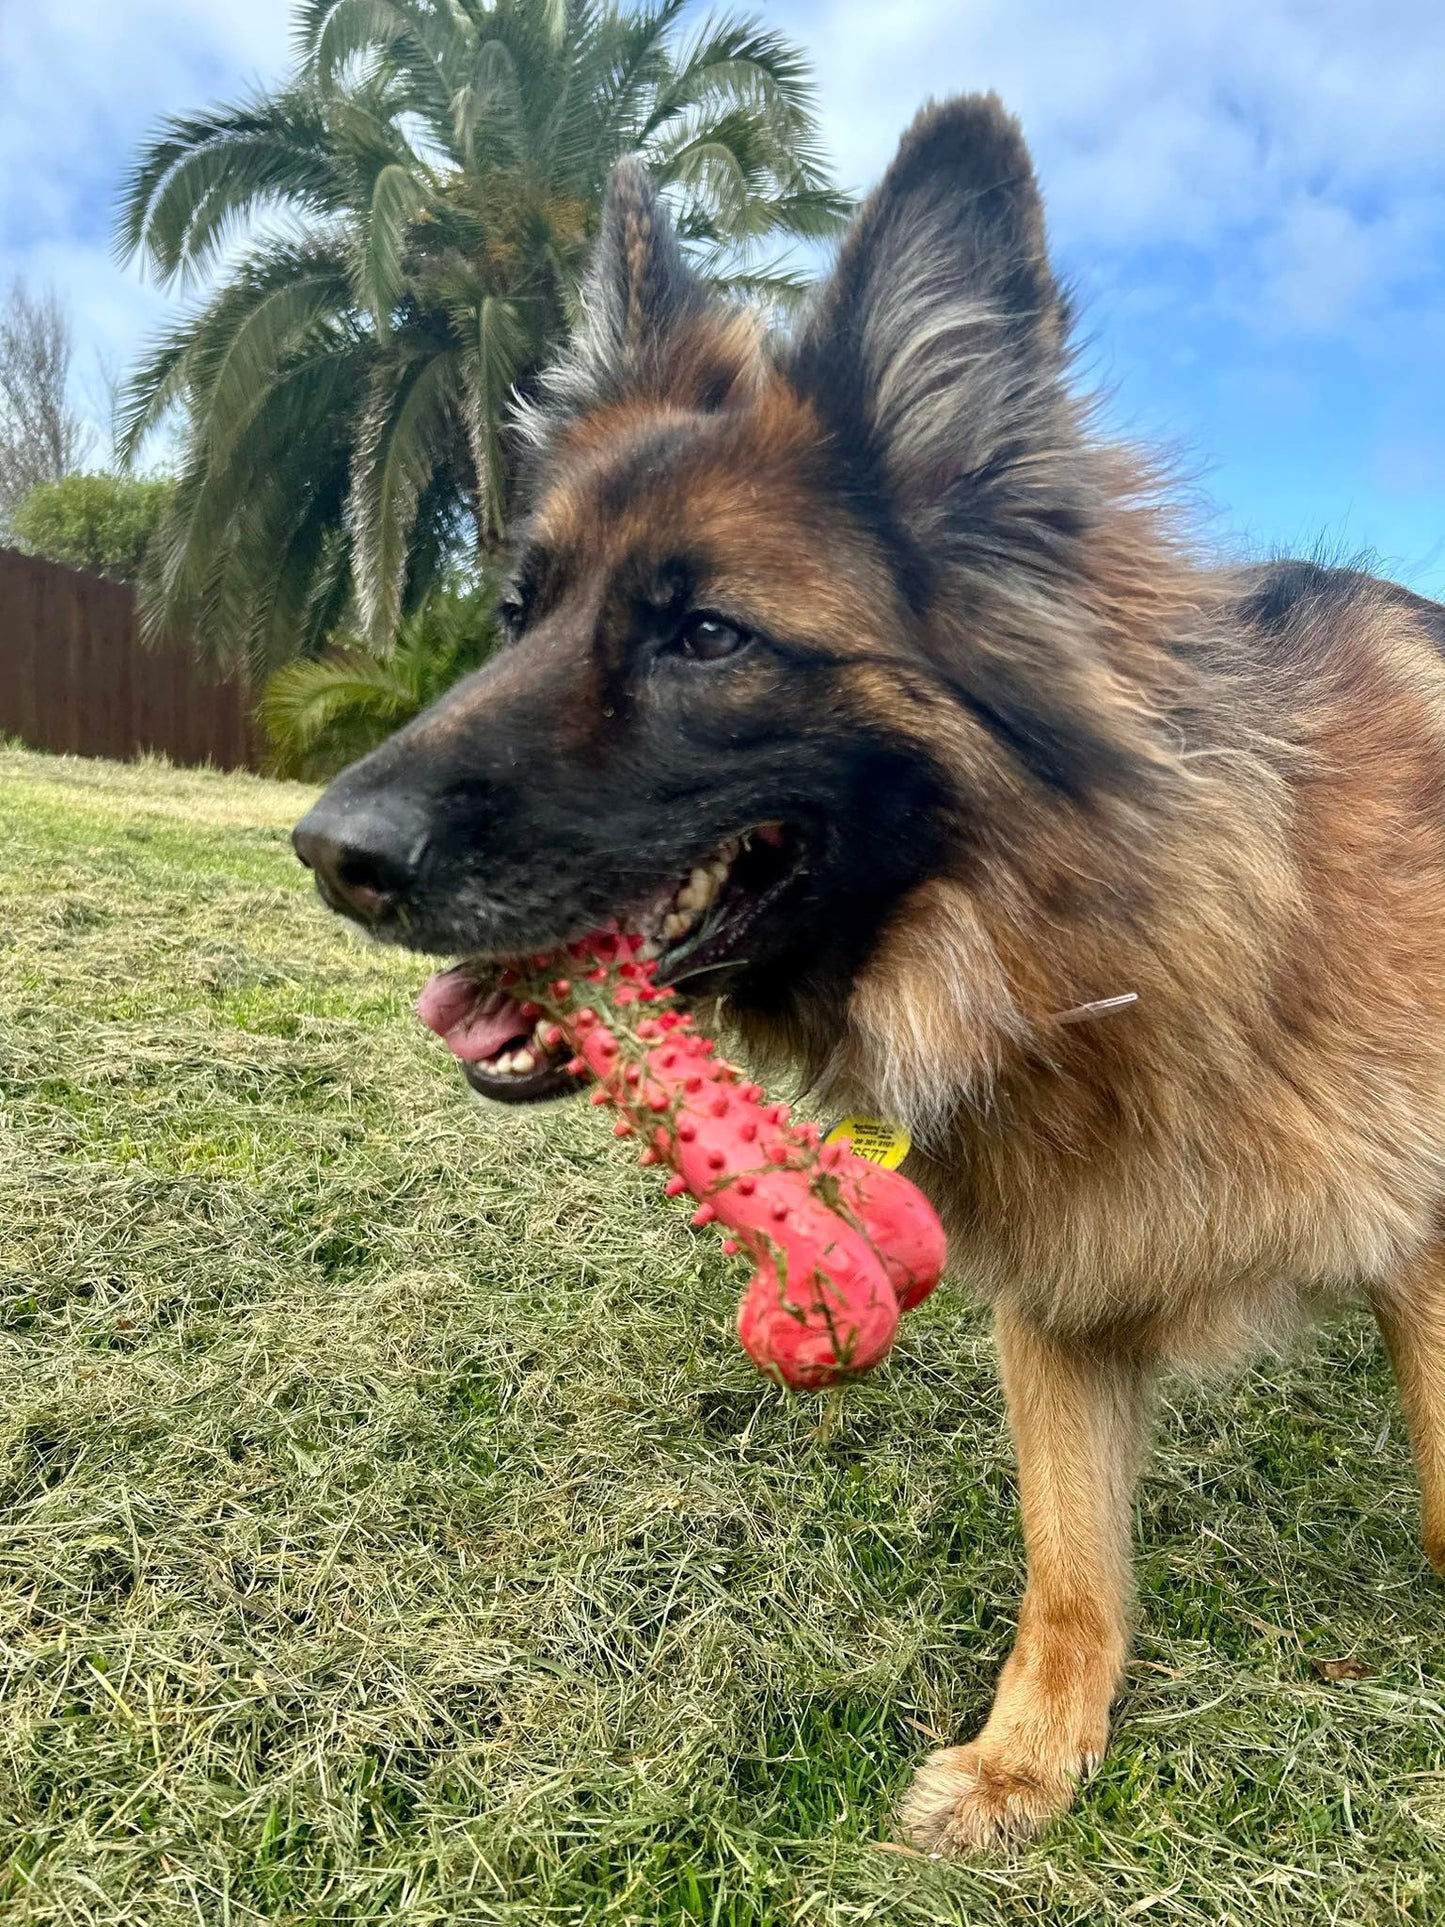 Food Grade Durable Dog Bone Toys -  Tooth Grinding Stick Chew Bone  - Red/Black